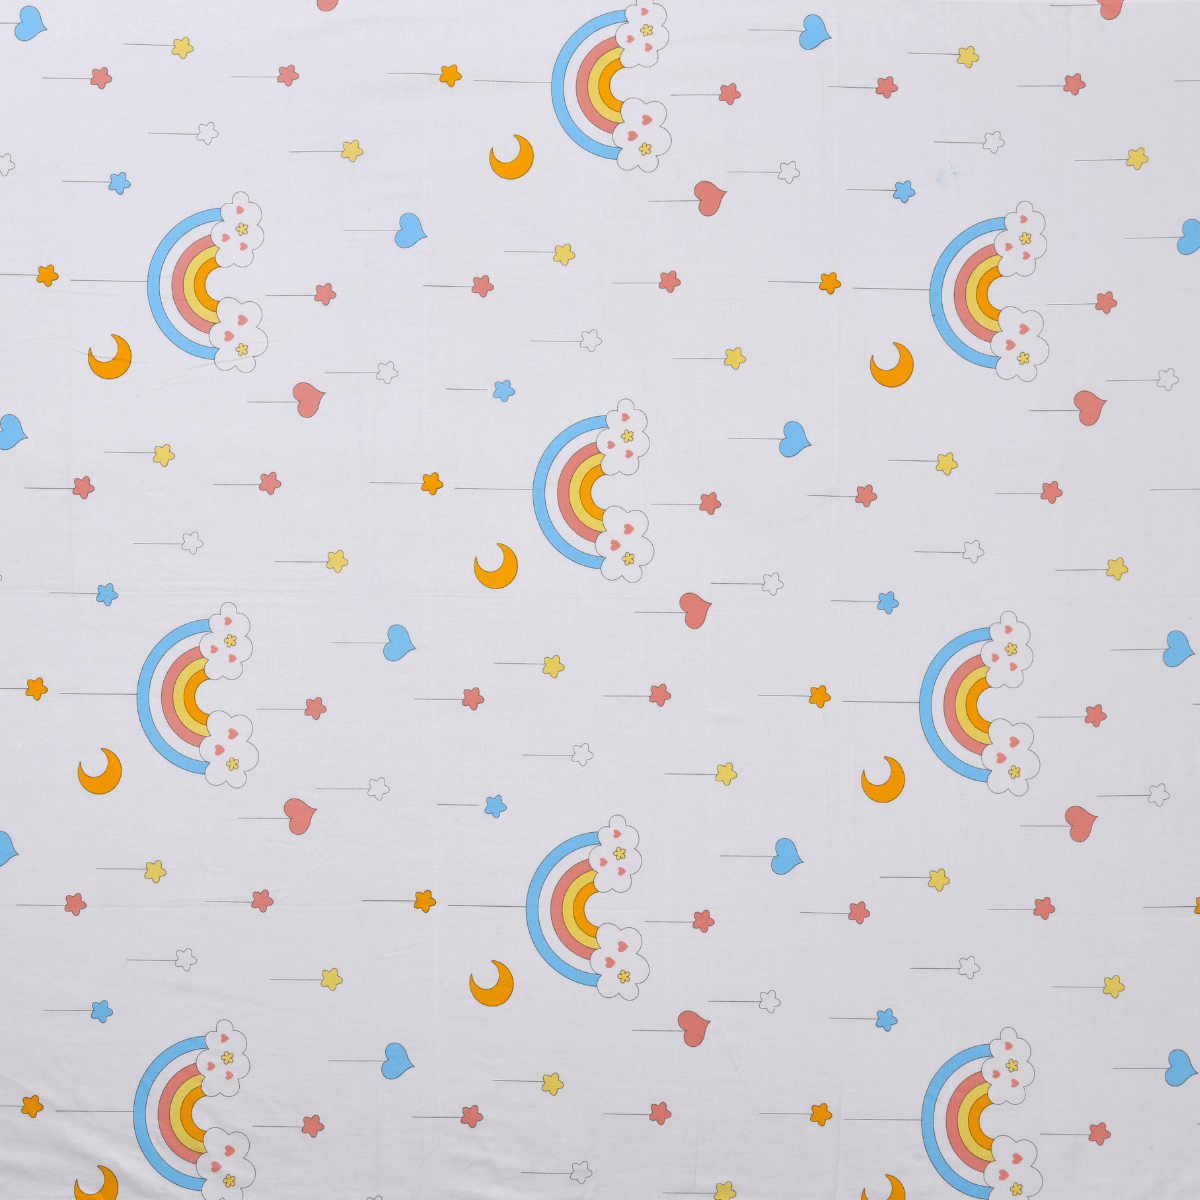 Trendy Prints Single Bedsheet for Kids, Unicorn Love